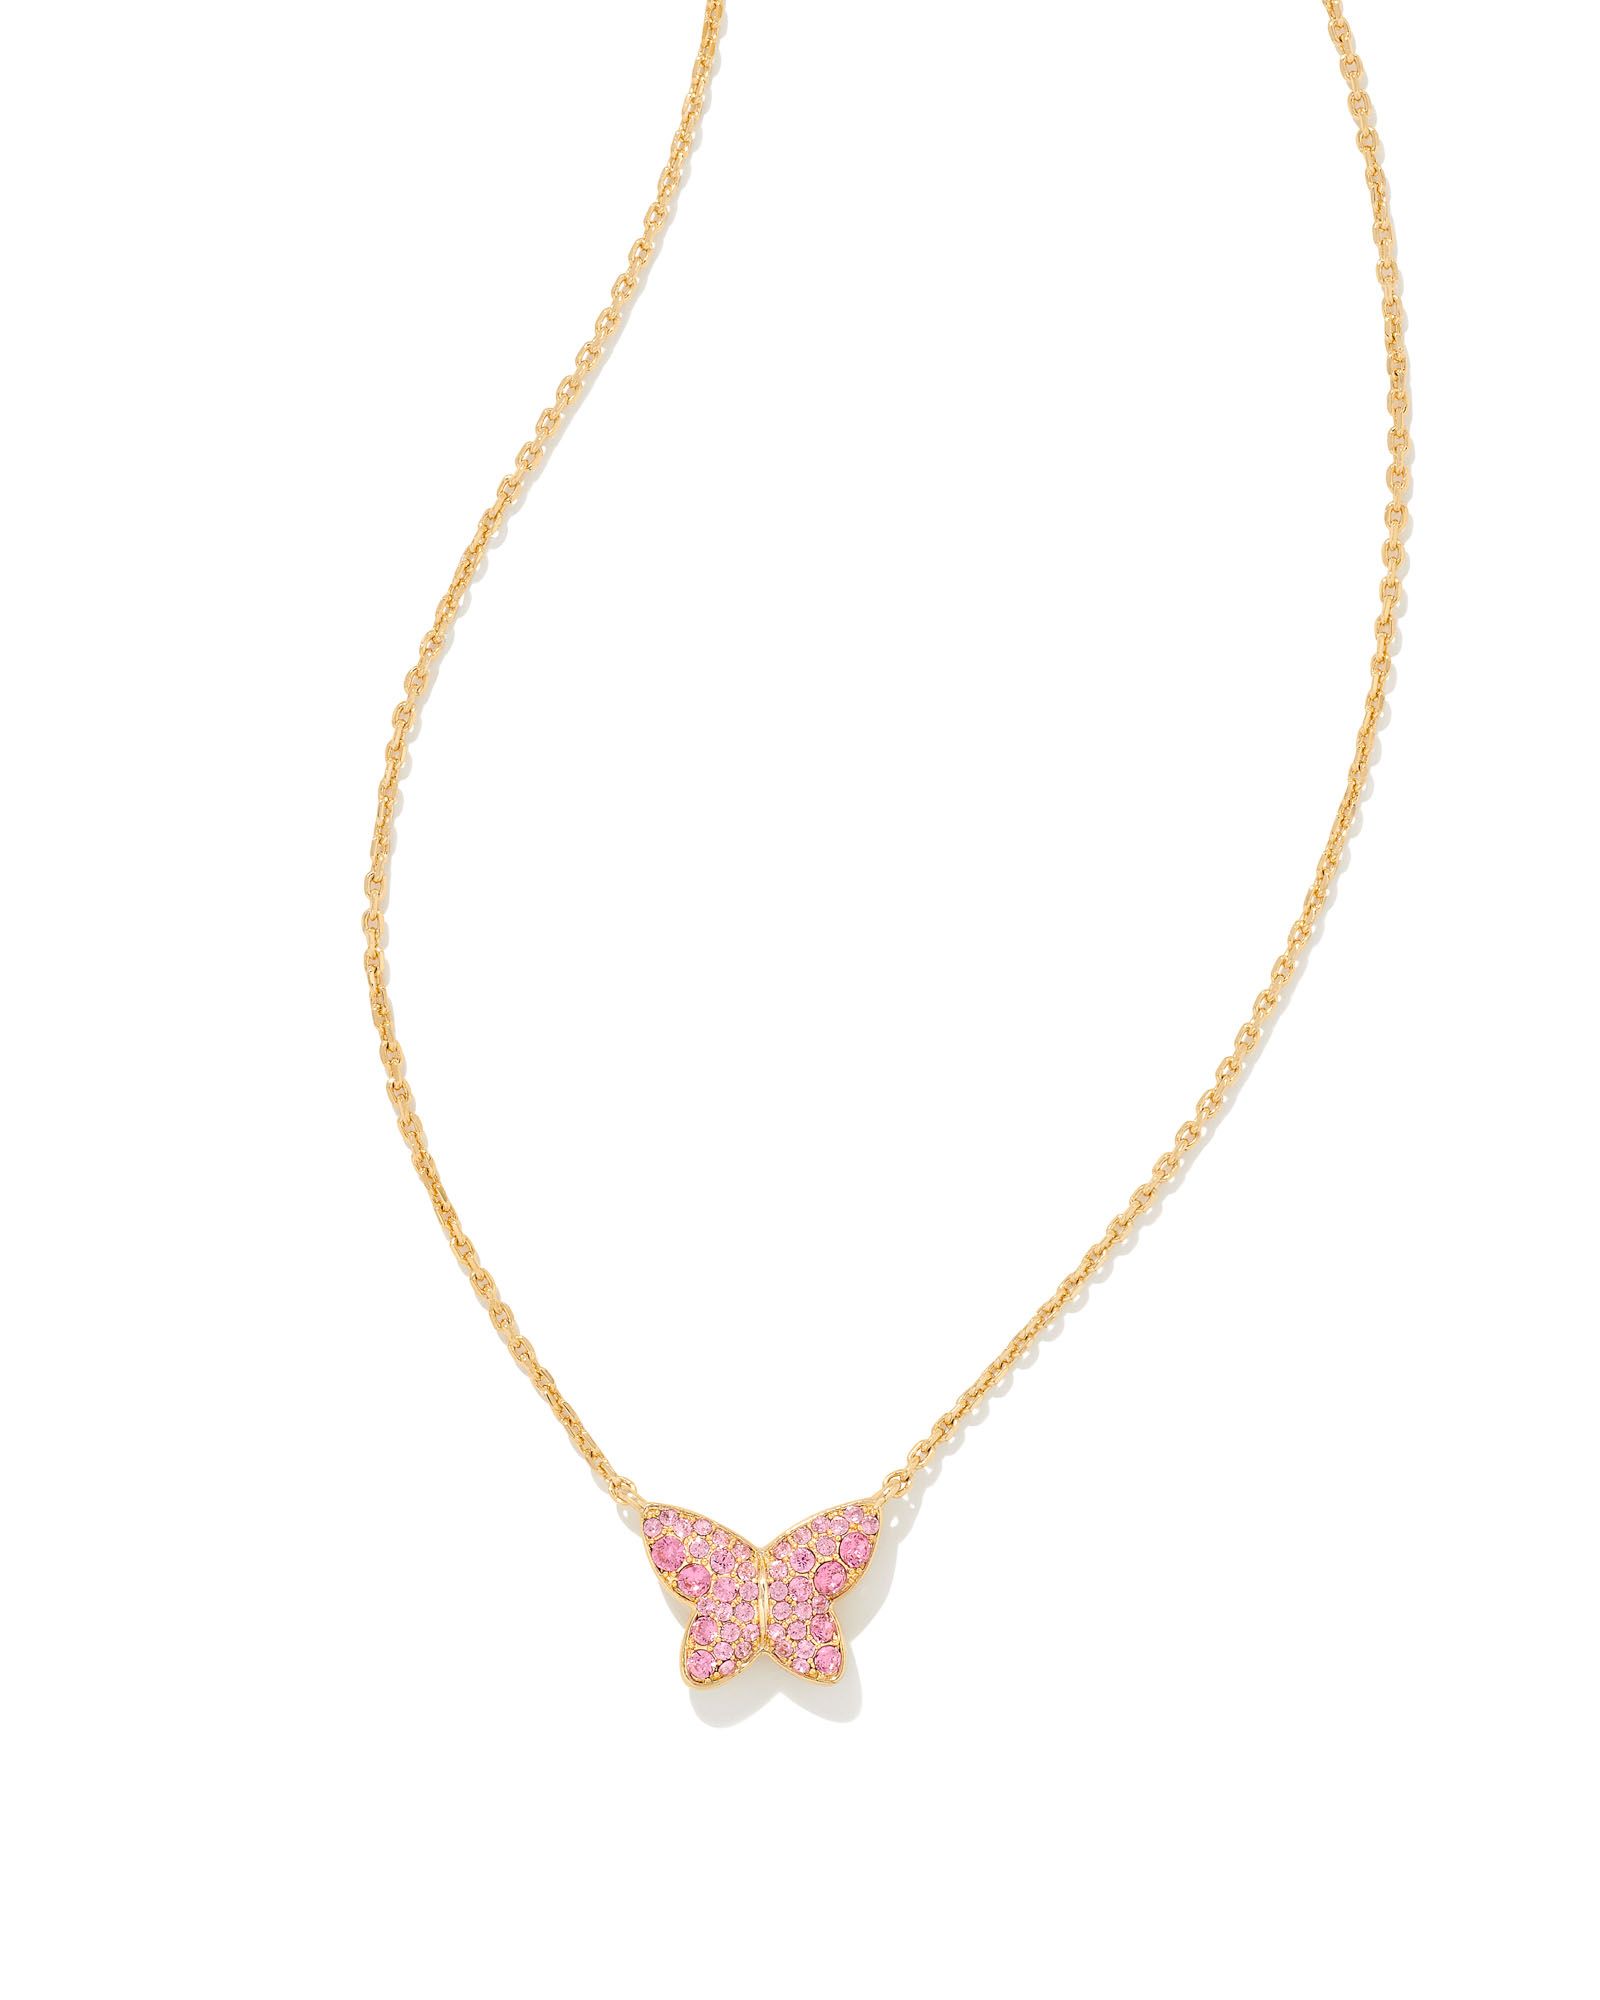 Lillia Butterfly Gold Pendant Necklace in Pink Crystal | Kendra Scott | Kendra Scott